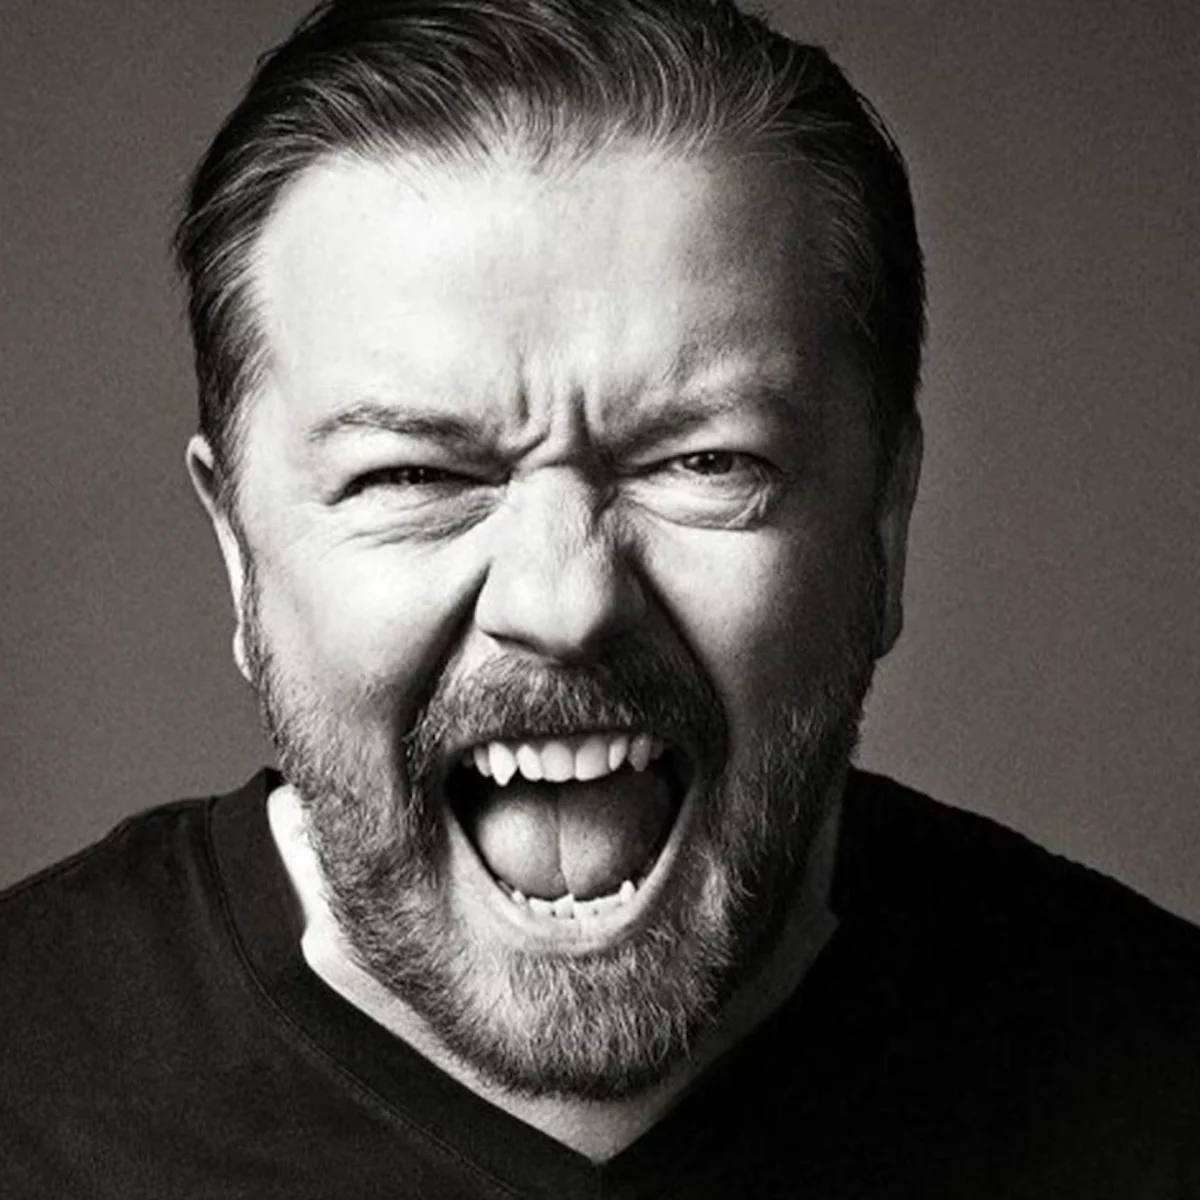 Ricky Gervais in Berlin: Programm “Armageddon” live erleben